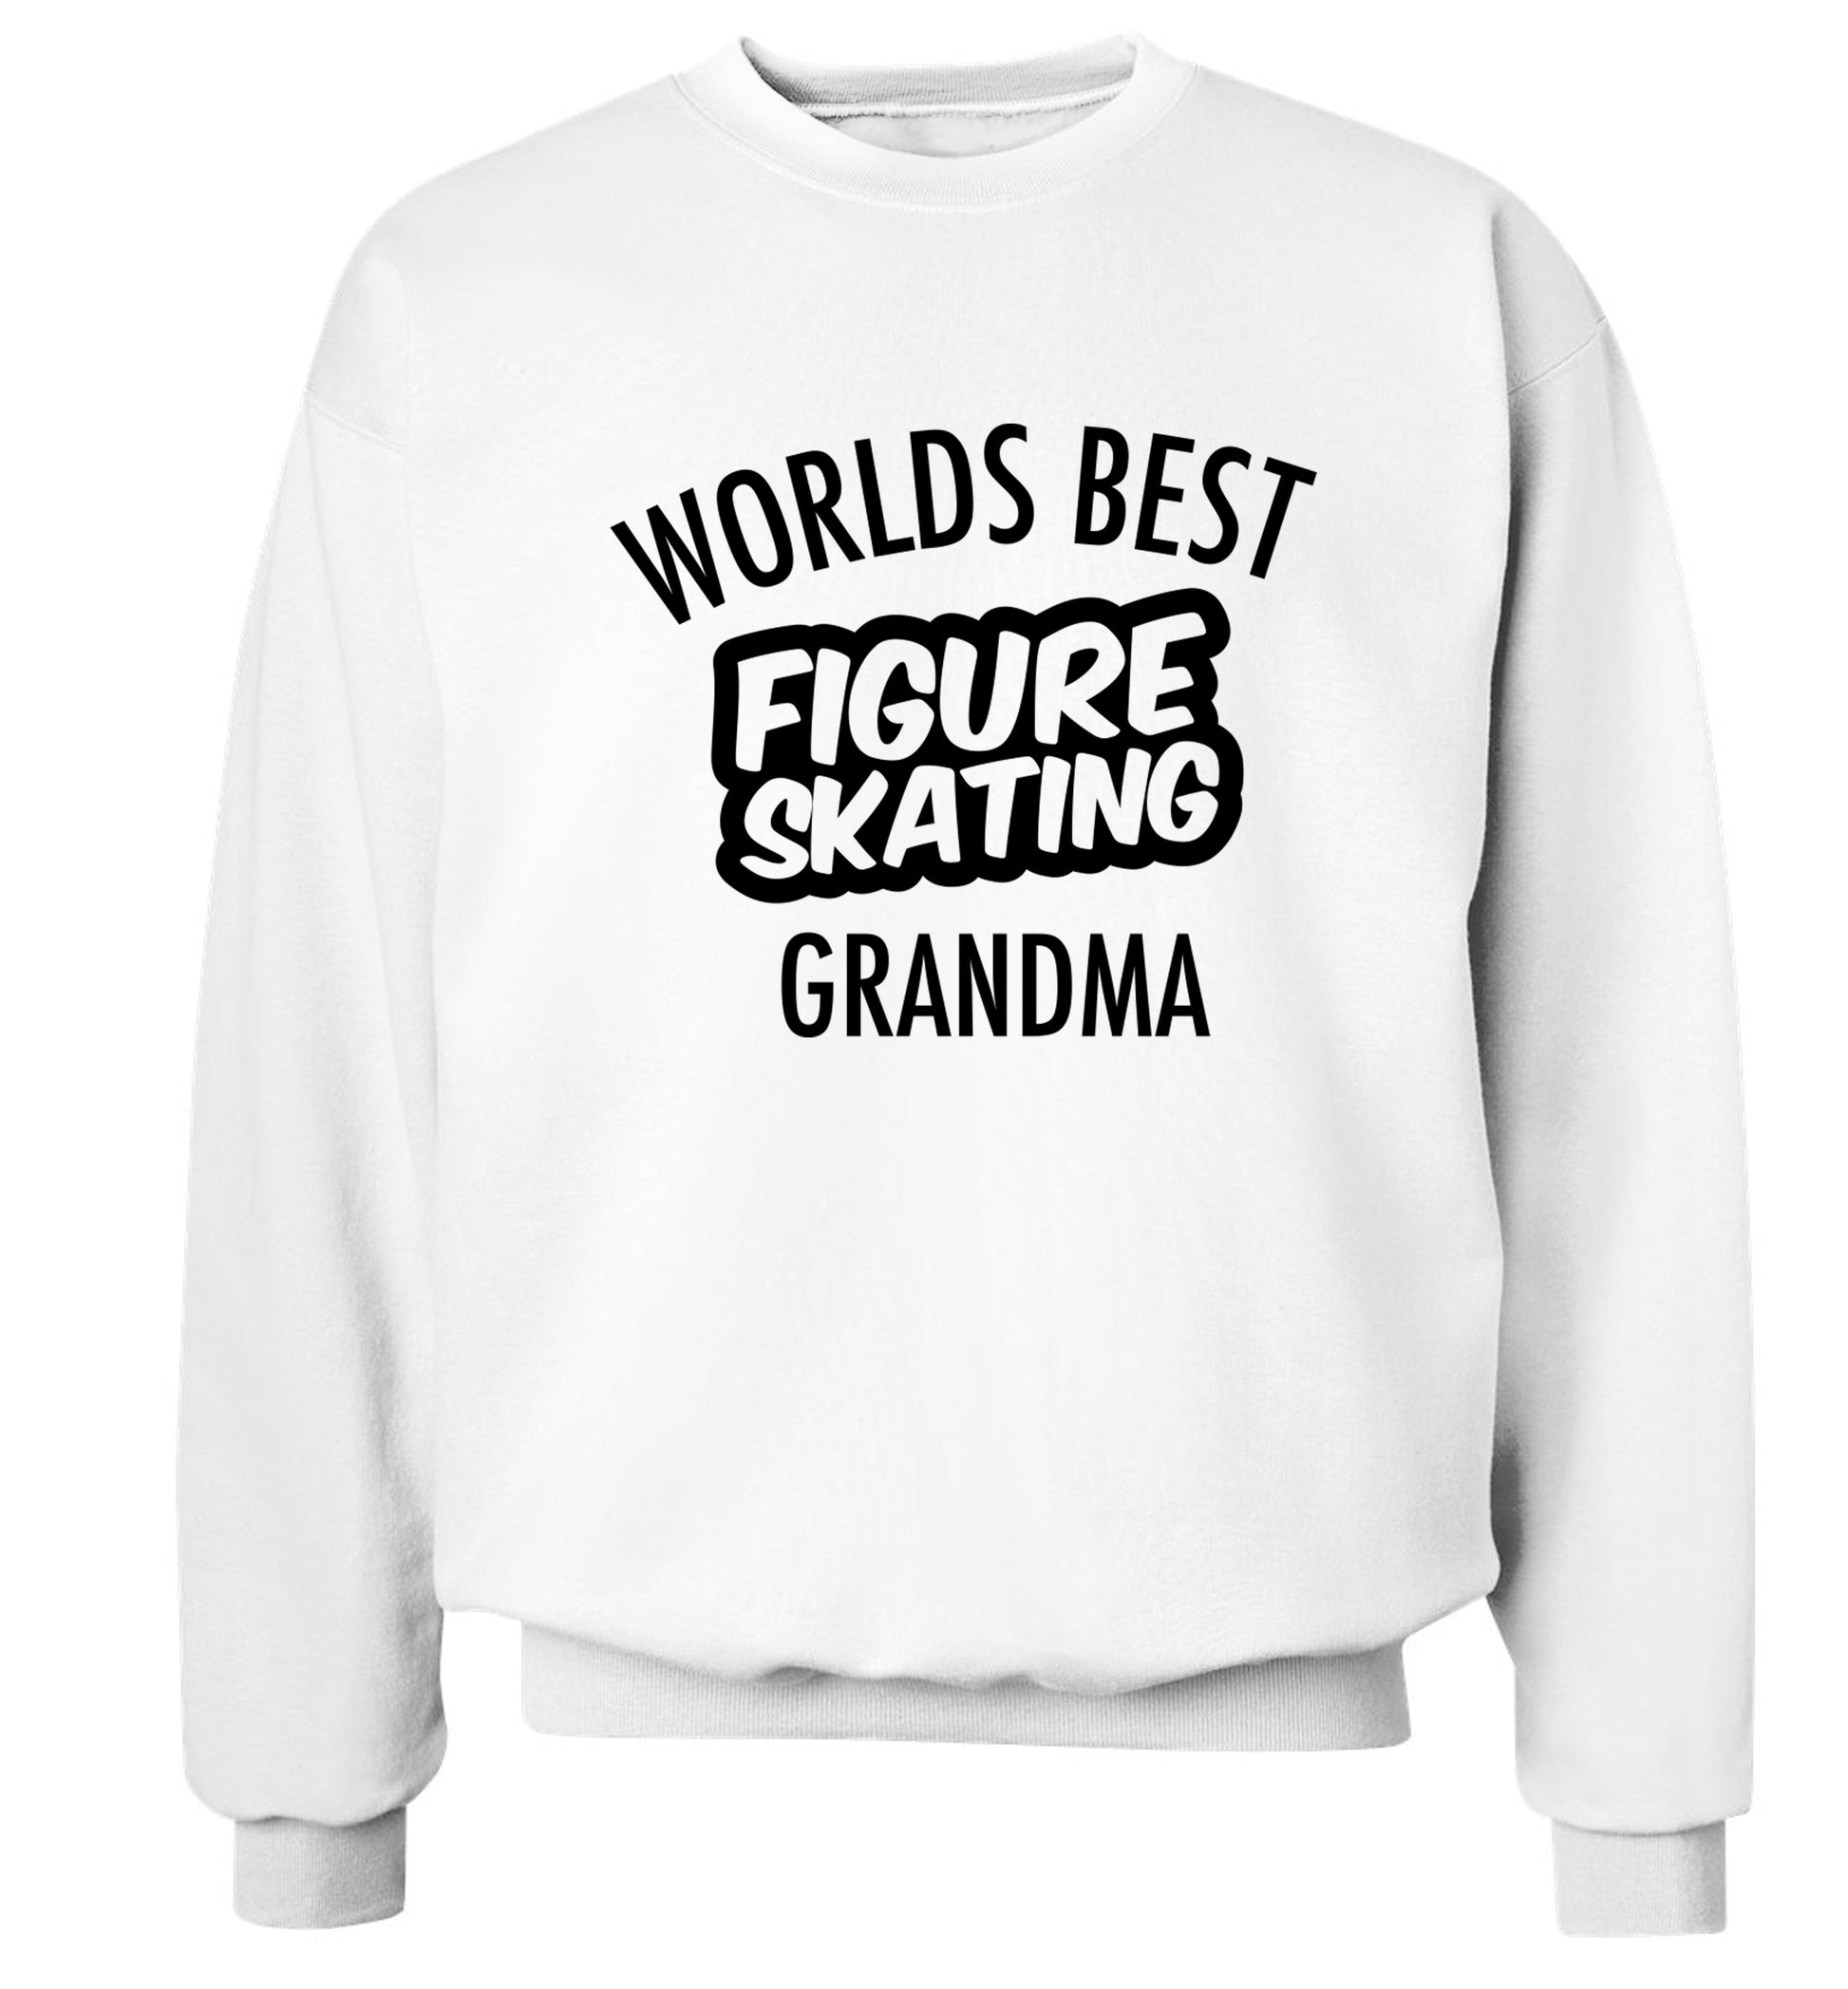 Worlds best figure skating grandma Adult's unisexwhite Sweater 2XL